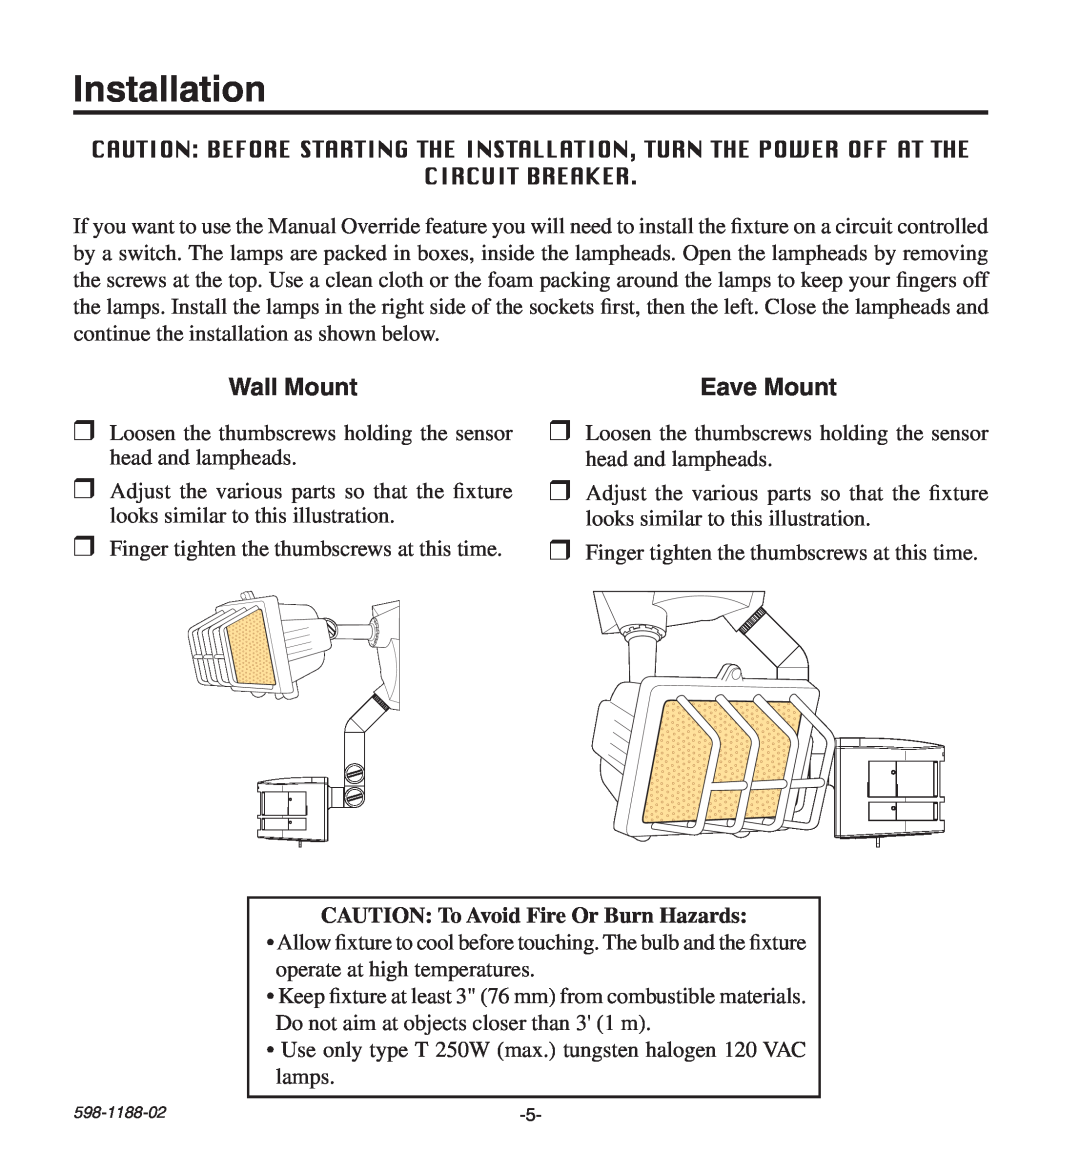 Heath Zenith HD-9260 manual Installation, Wall Mount, Eave Mount, circuit breaker, CAUTION To Avoid Fire Or Burn Hazards 